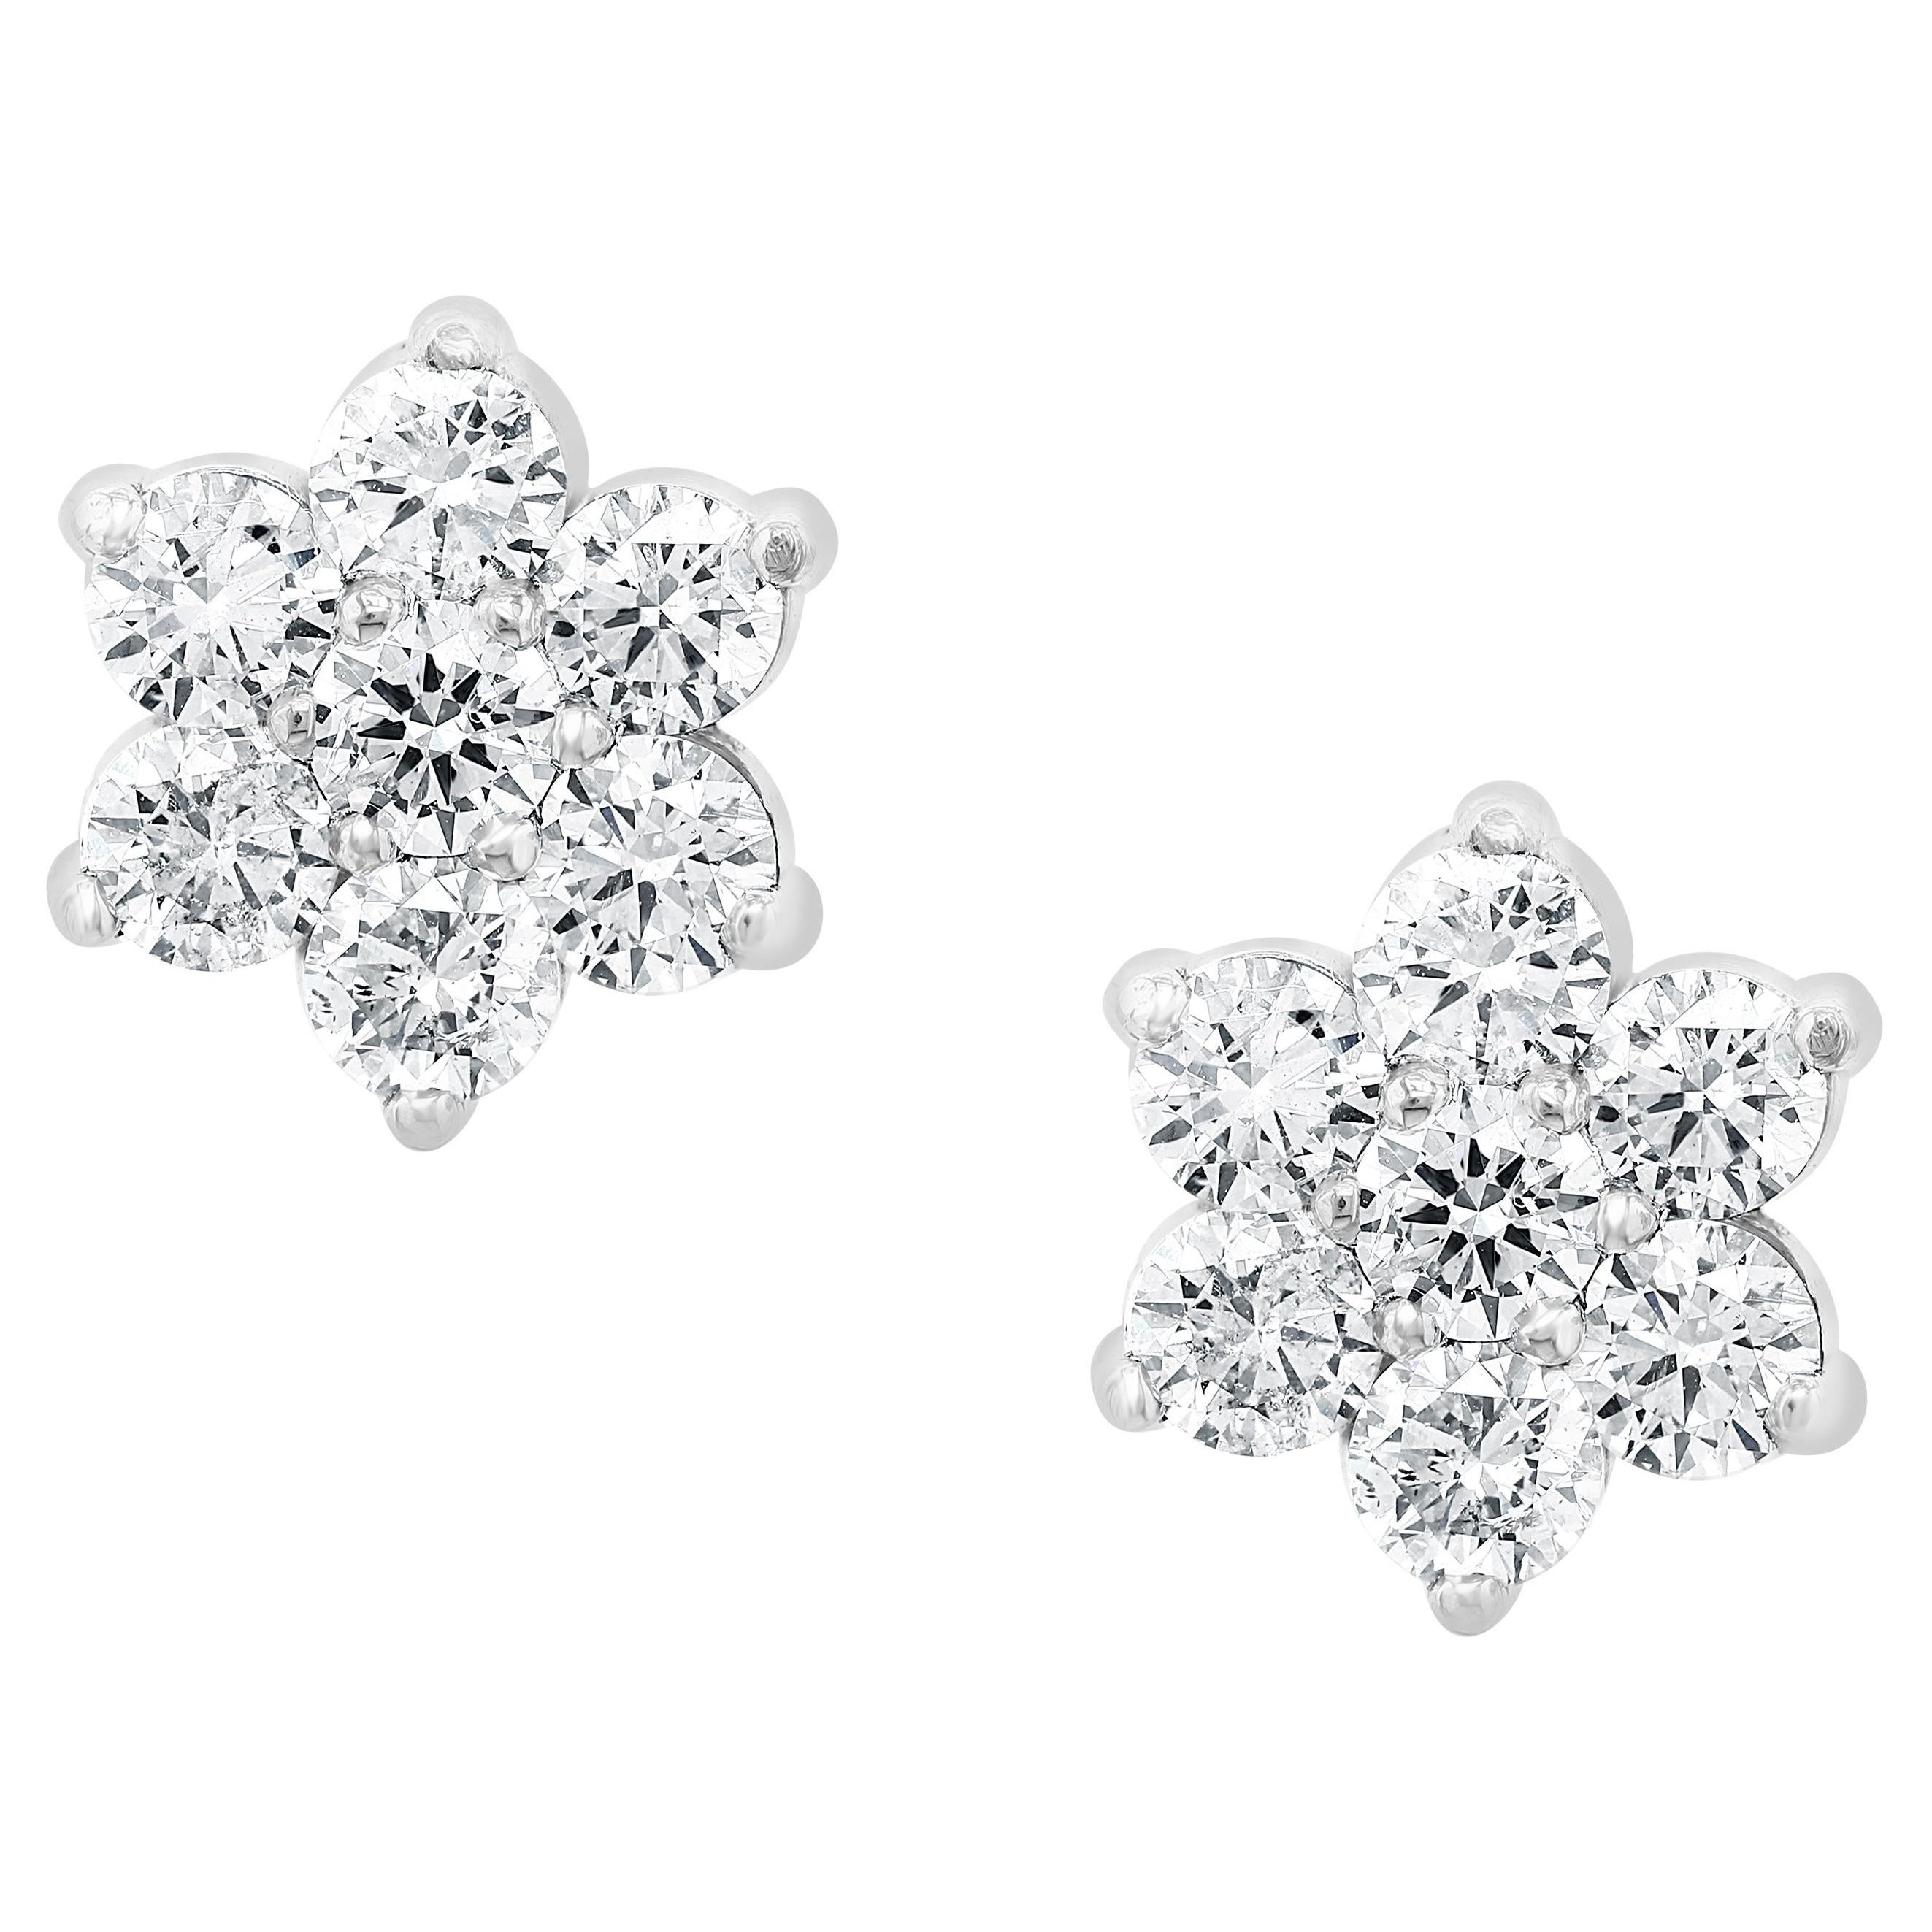 3.75 Carat Round Diamond Cluster Flower Earrings